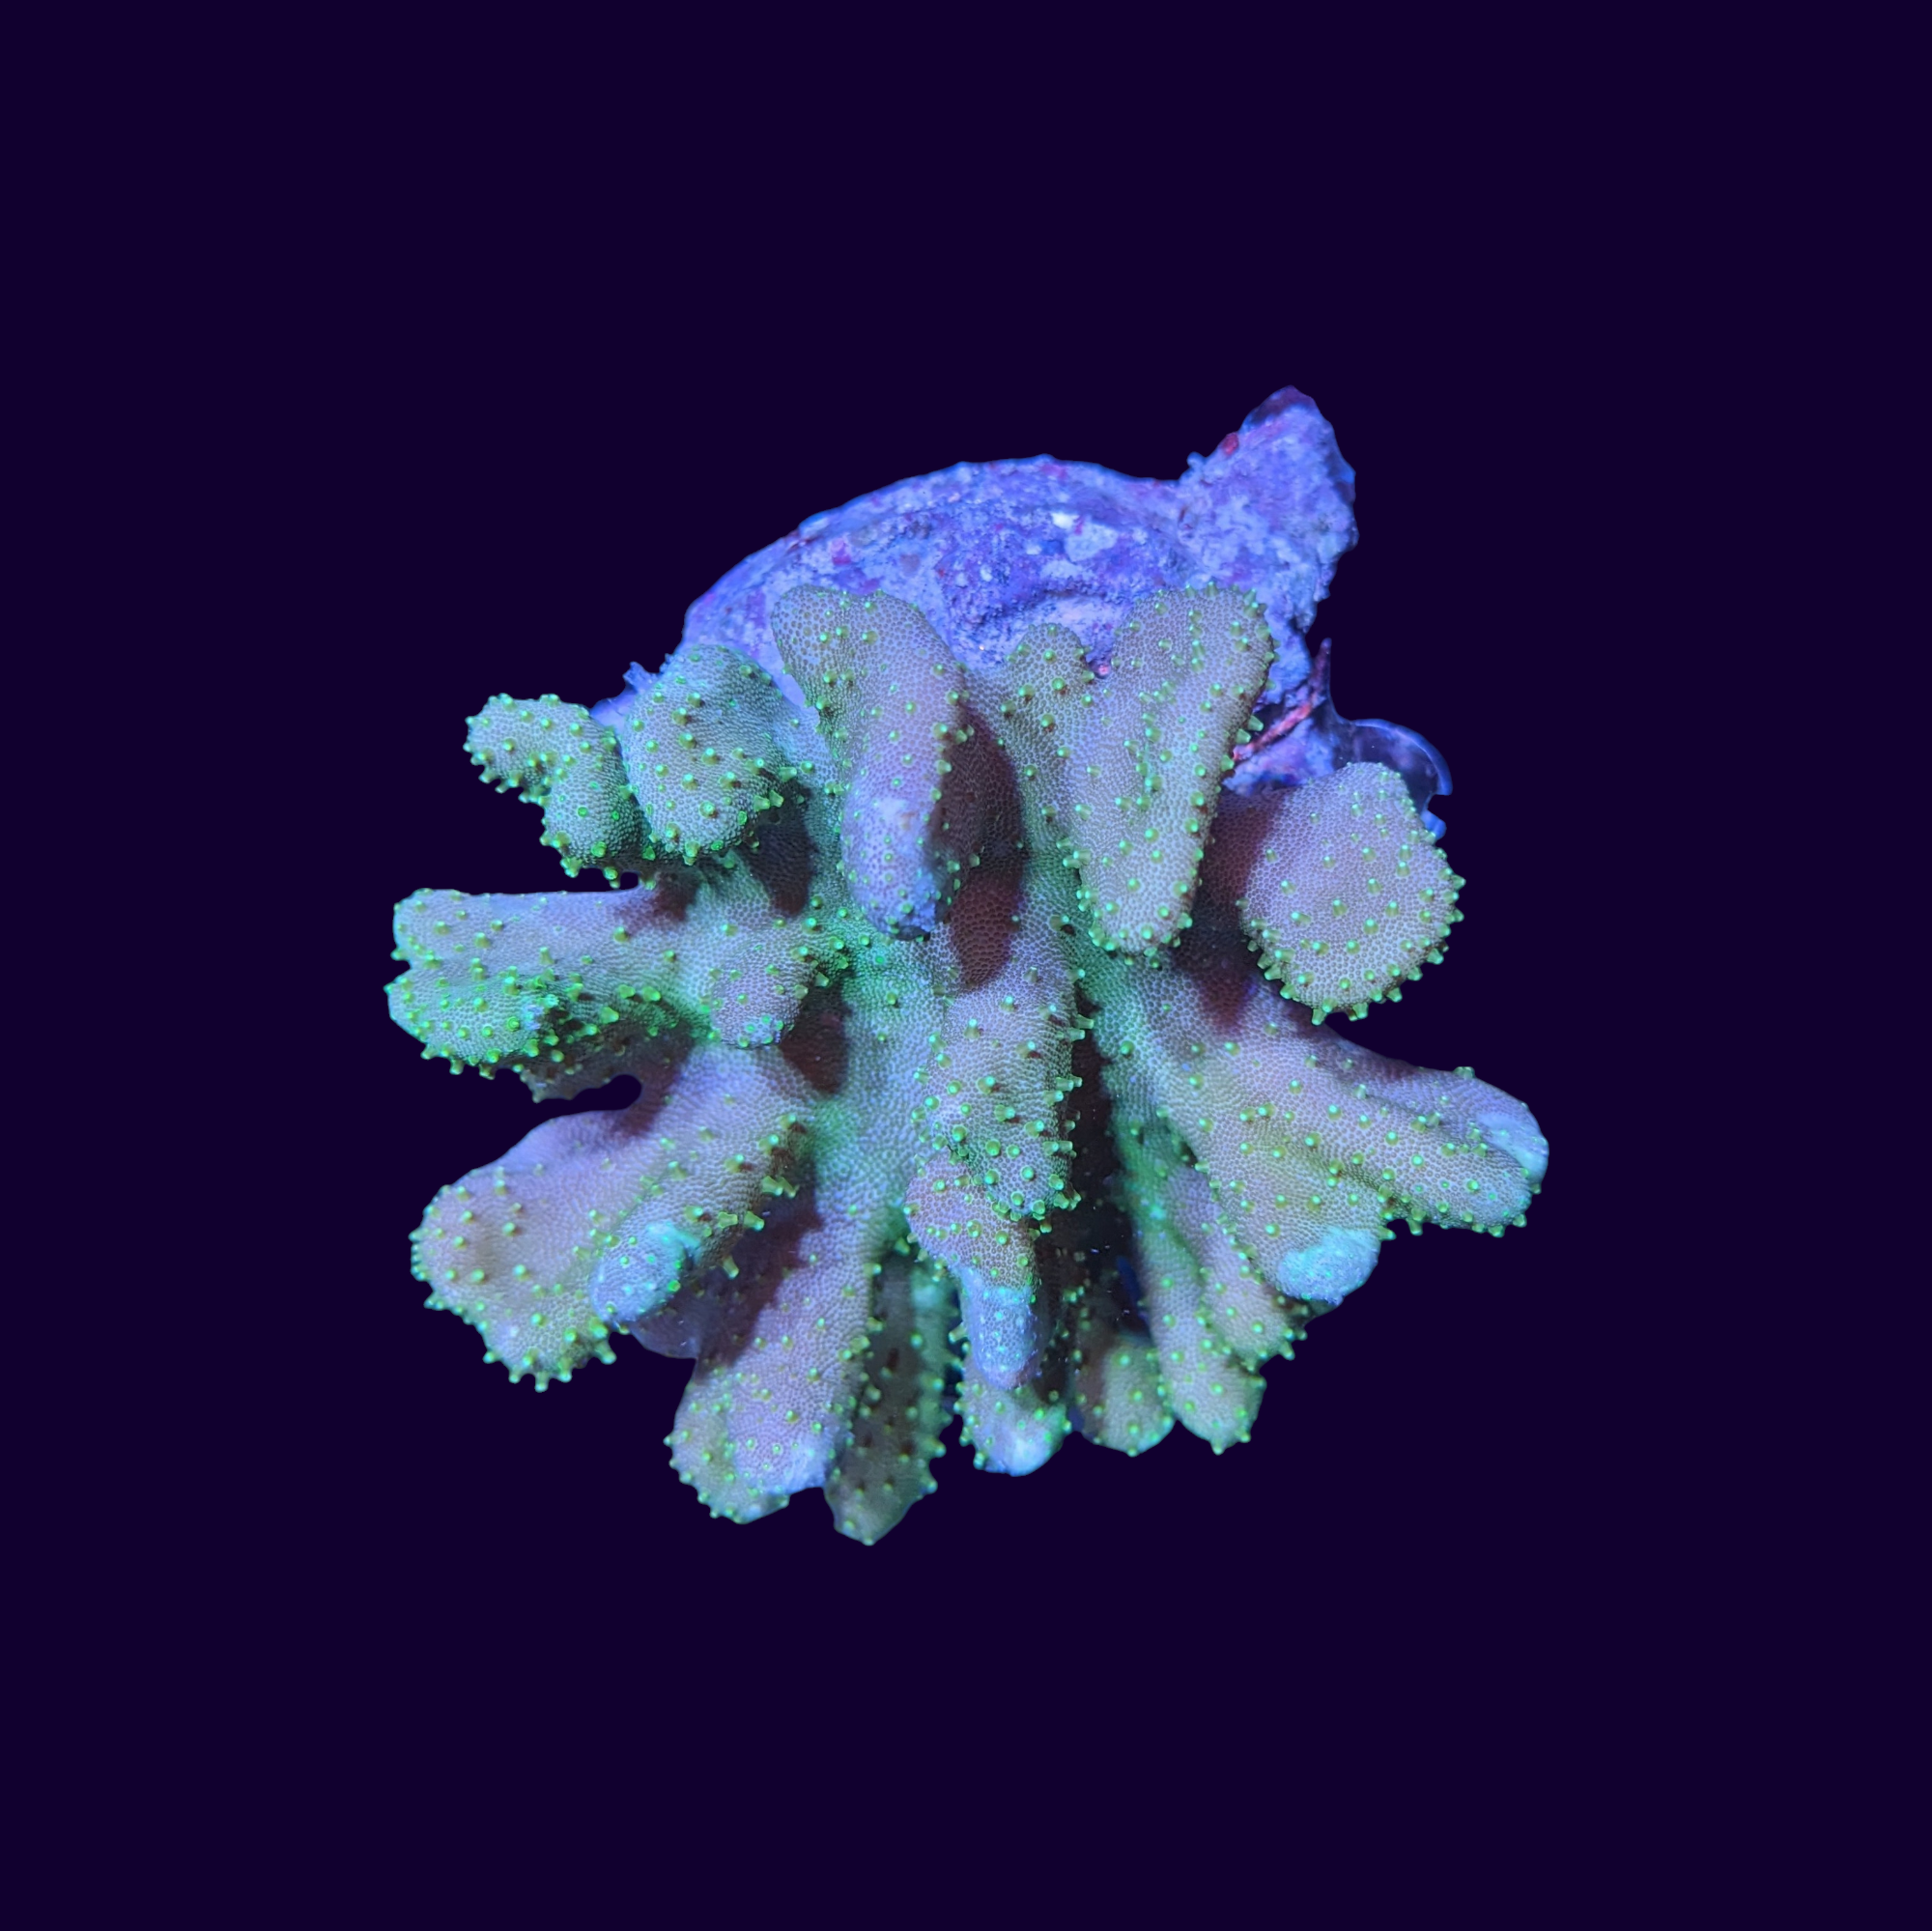 Lobophytum Leather Coral